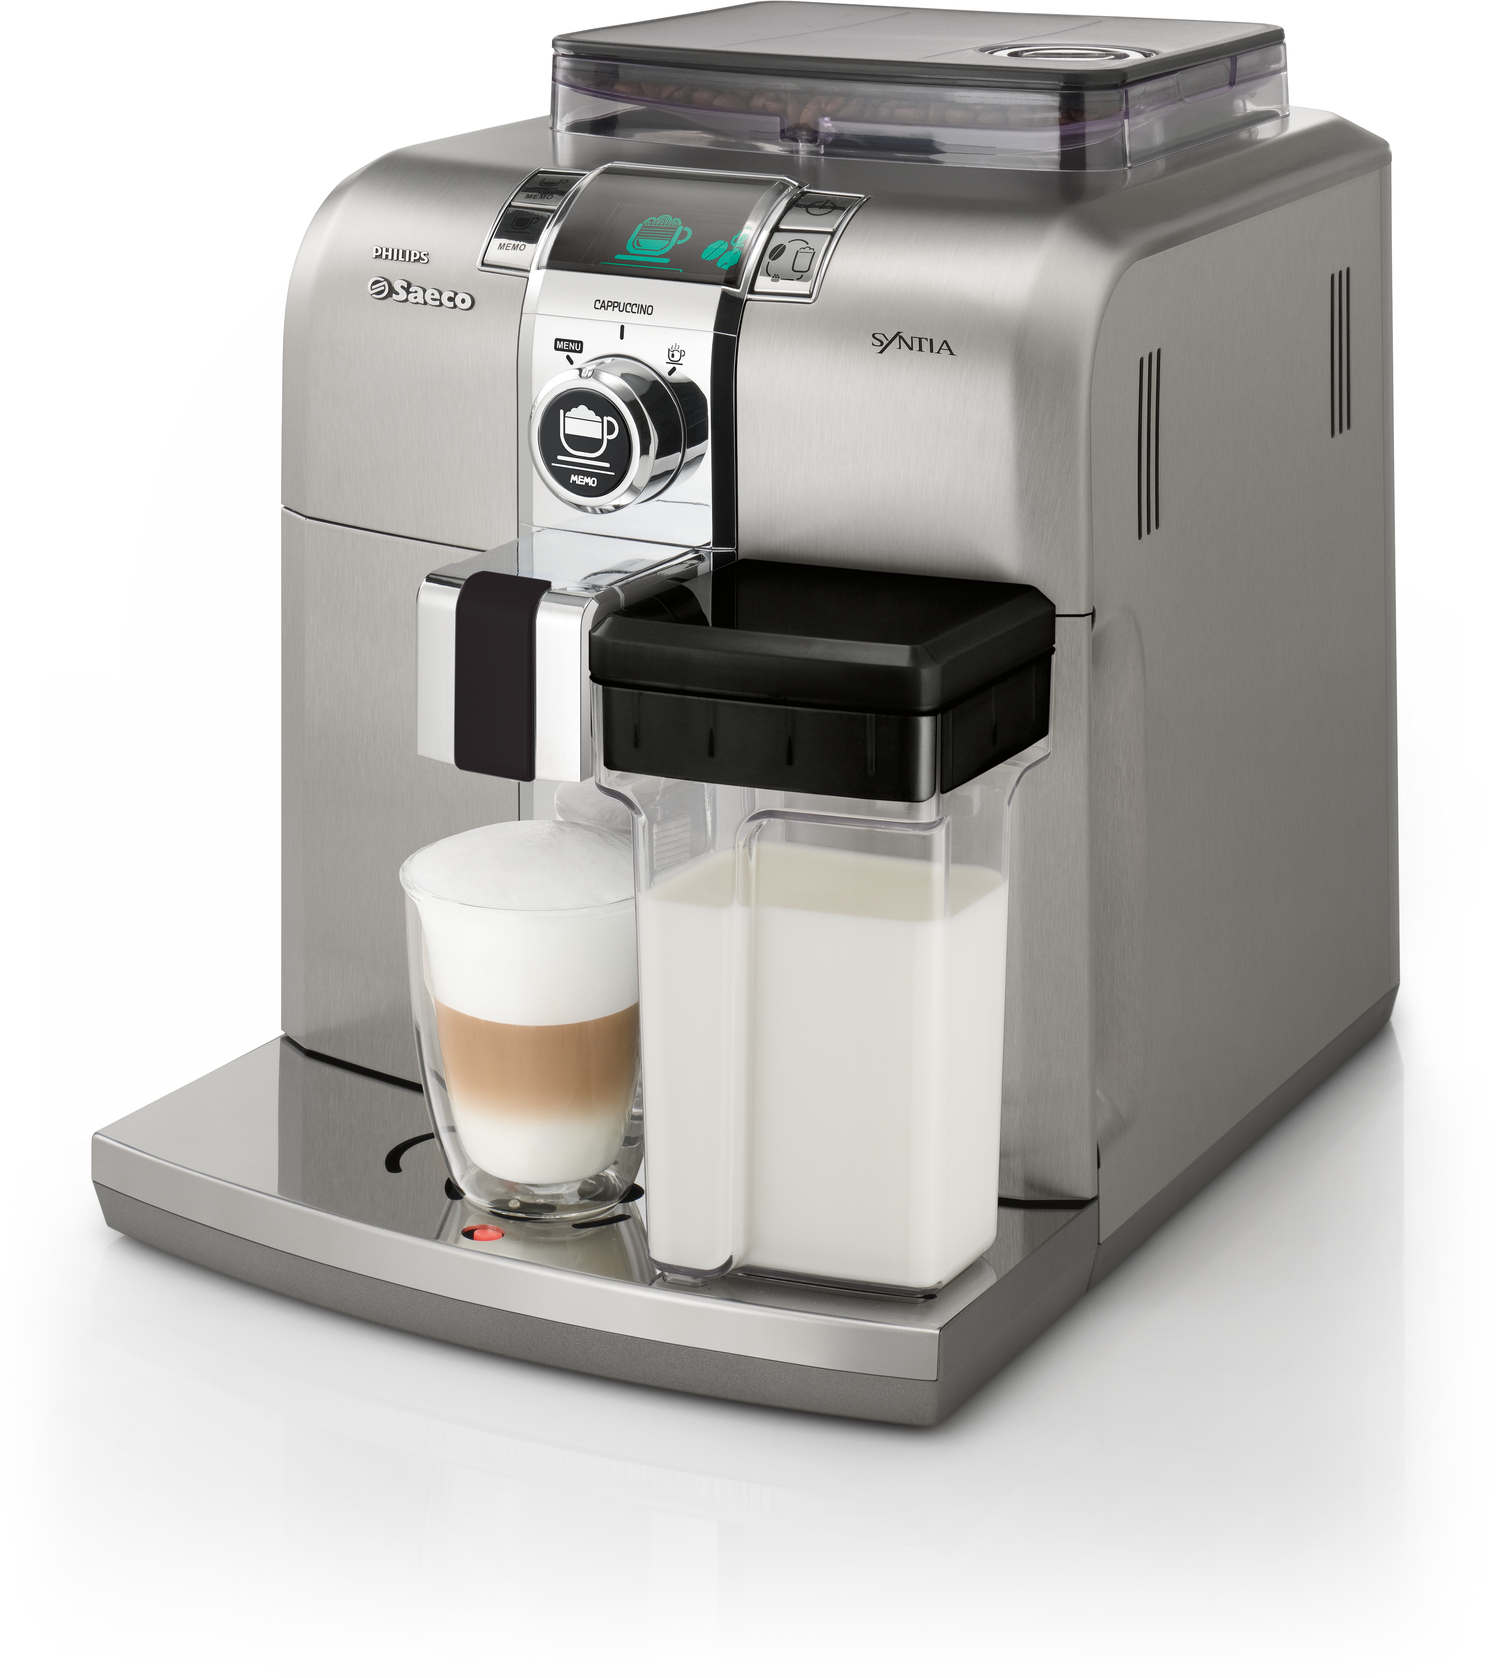 Saeco HD8838/06 coffee maker